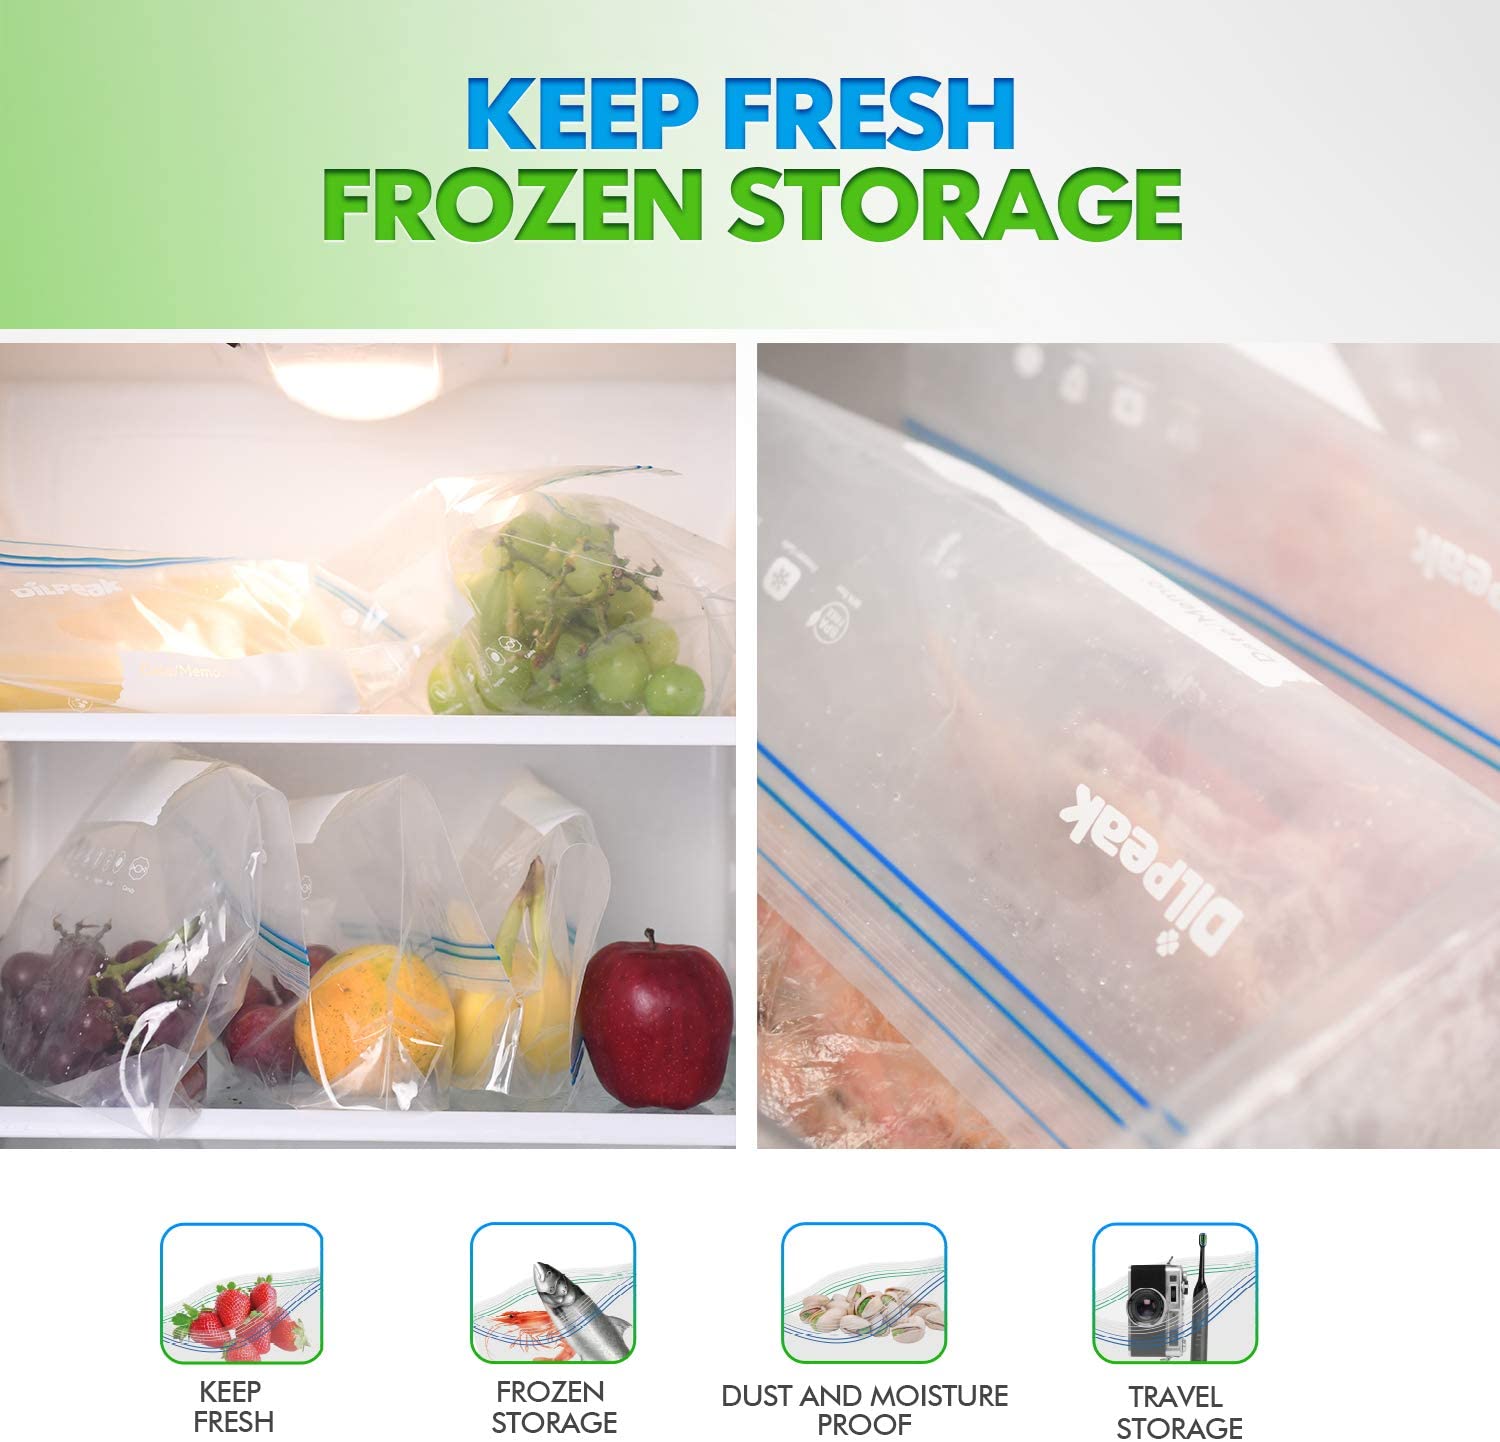 Food Freezer Bags, Ziplock Bags, Sandwich Bags